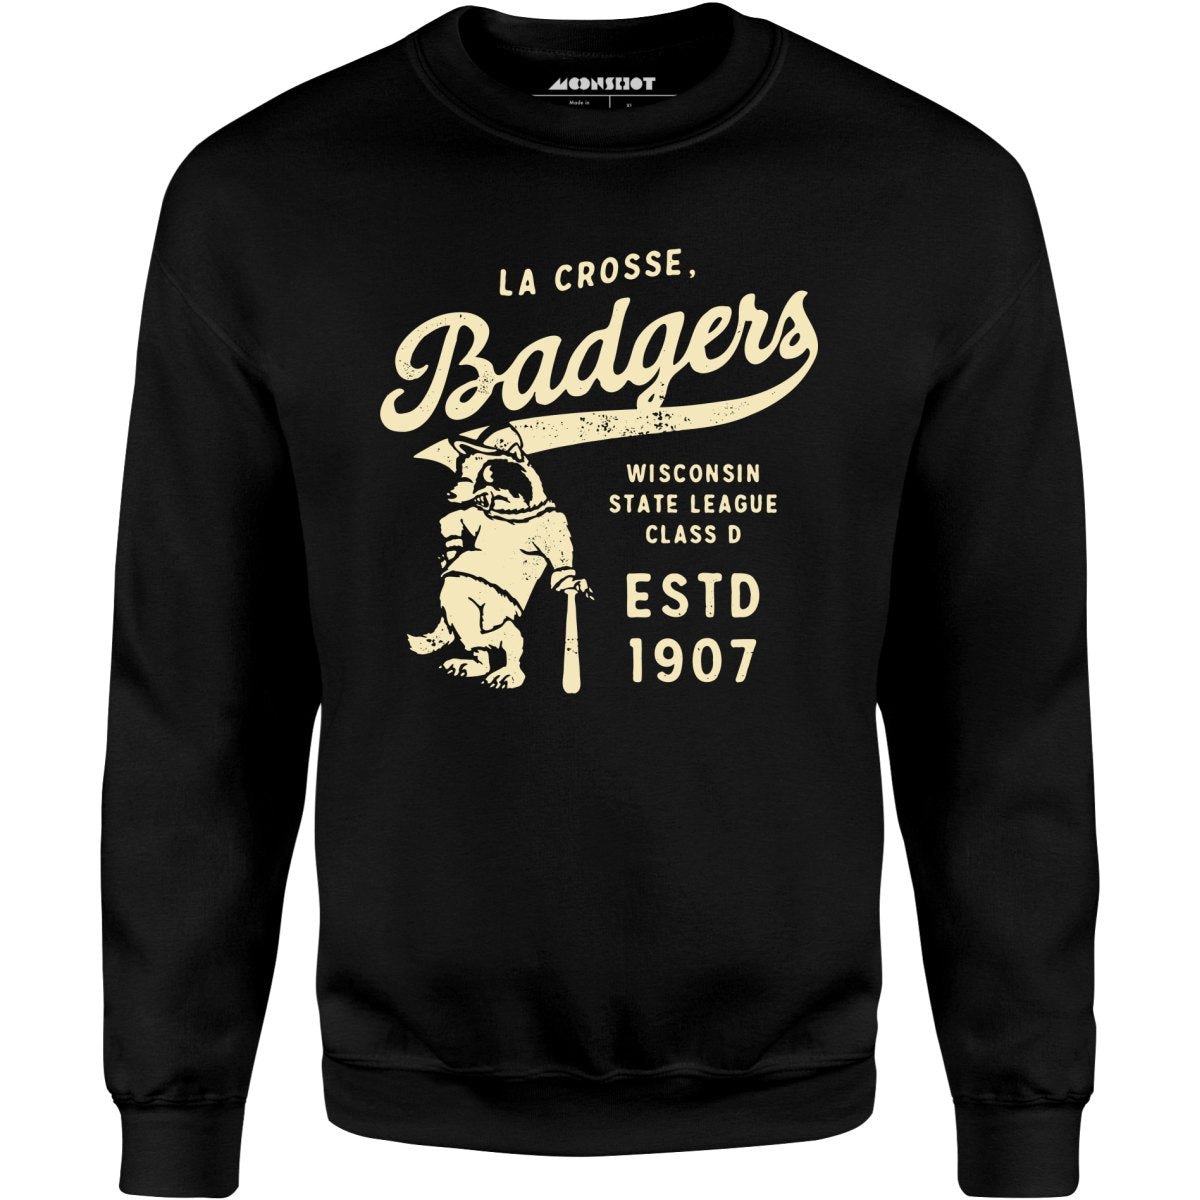 La Crosse Badgers - Wisconsin - Vintage Defunct Baseball Teams - Unisex Sweatshirt